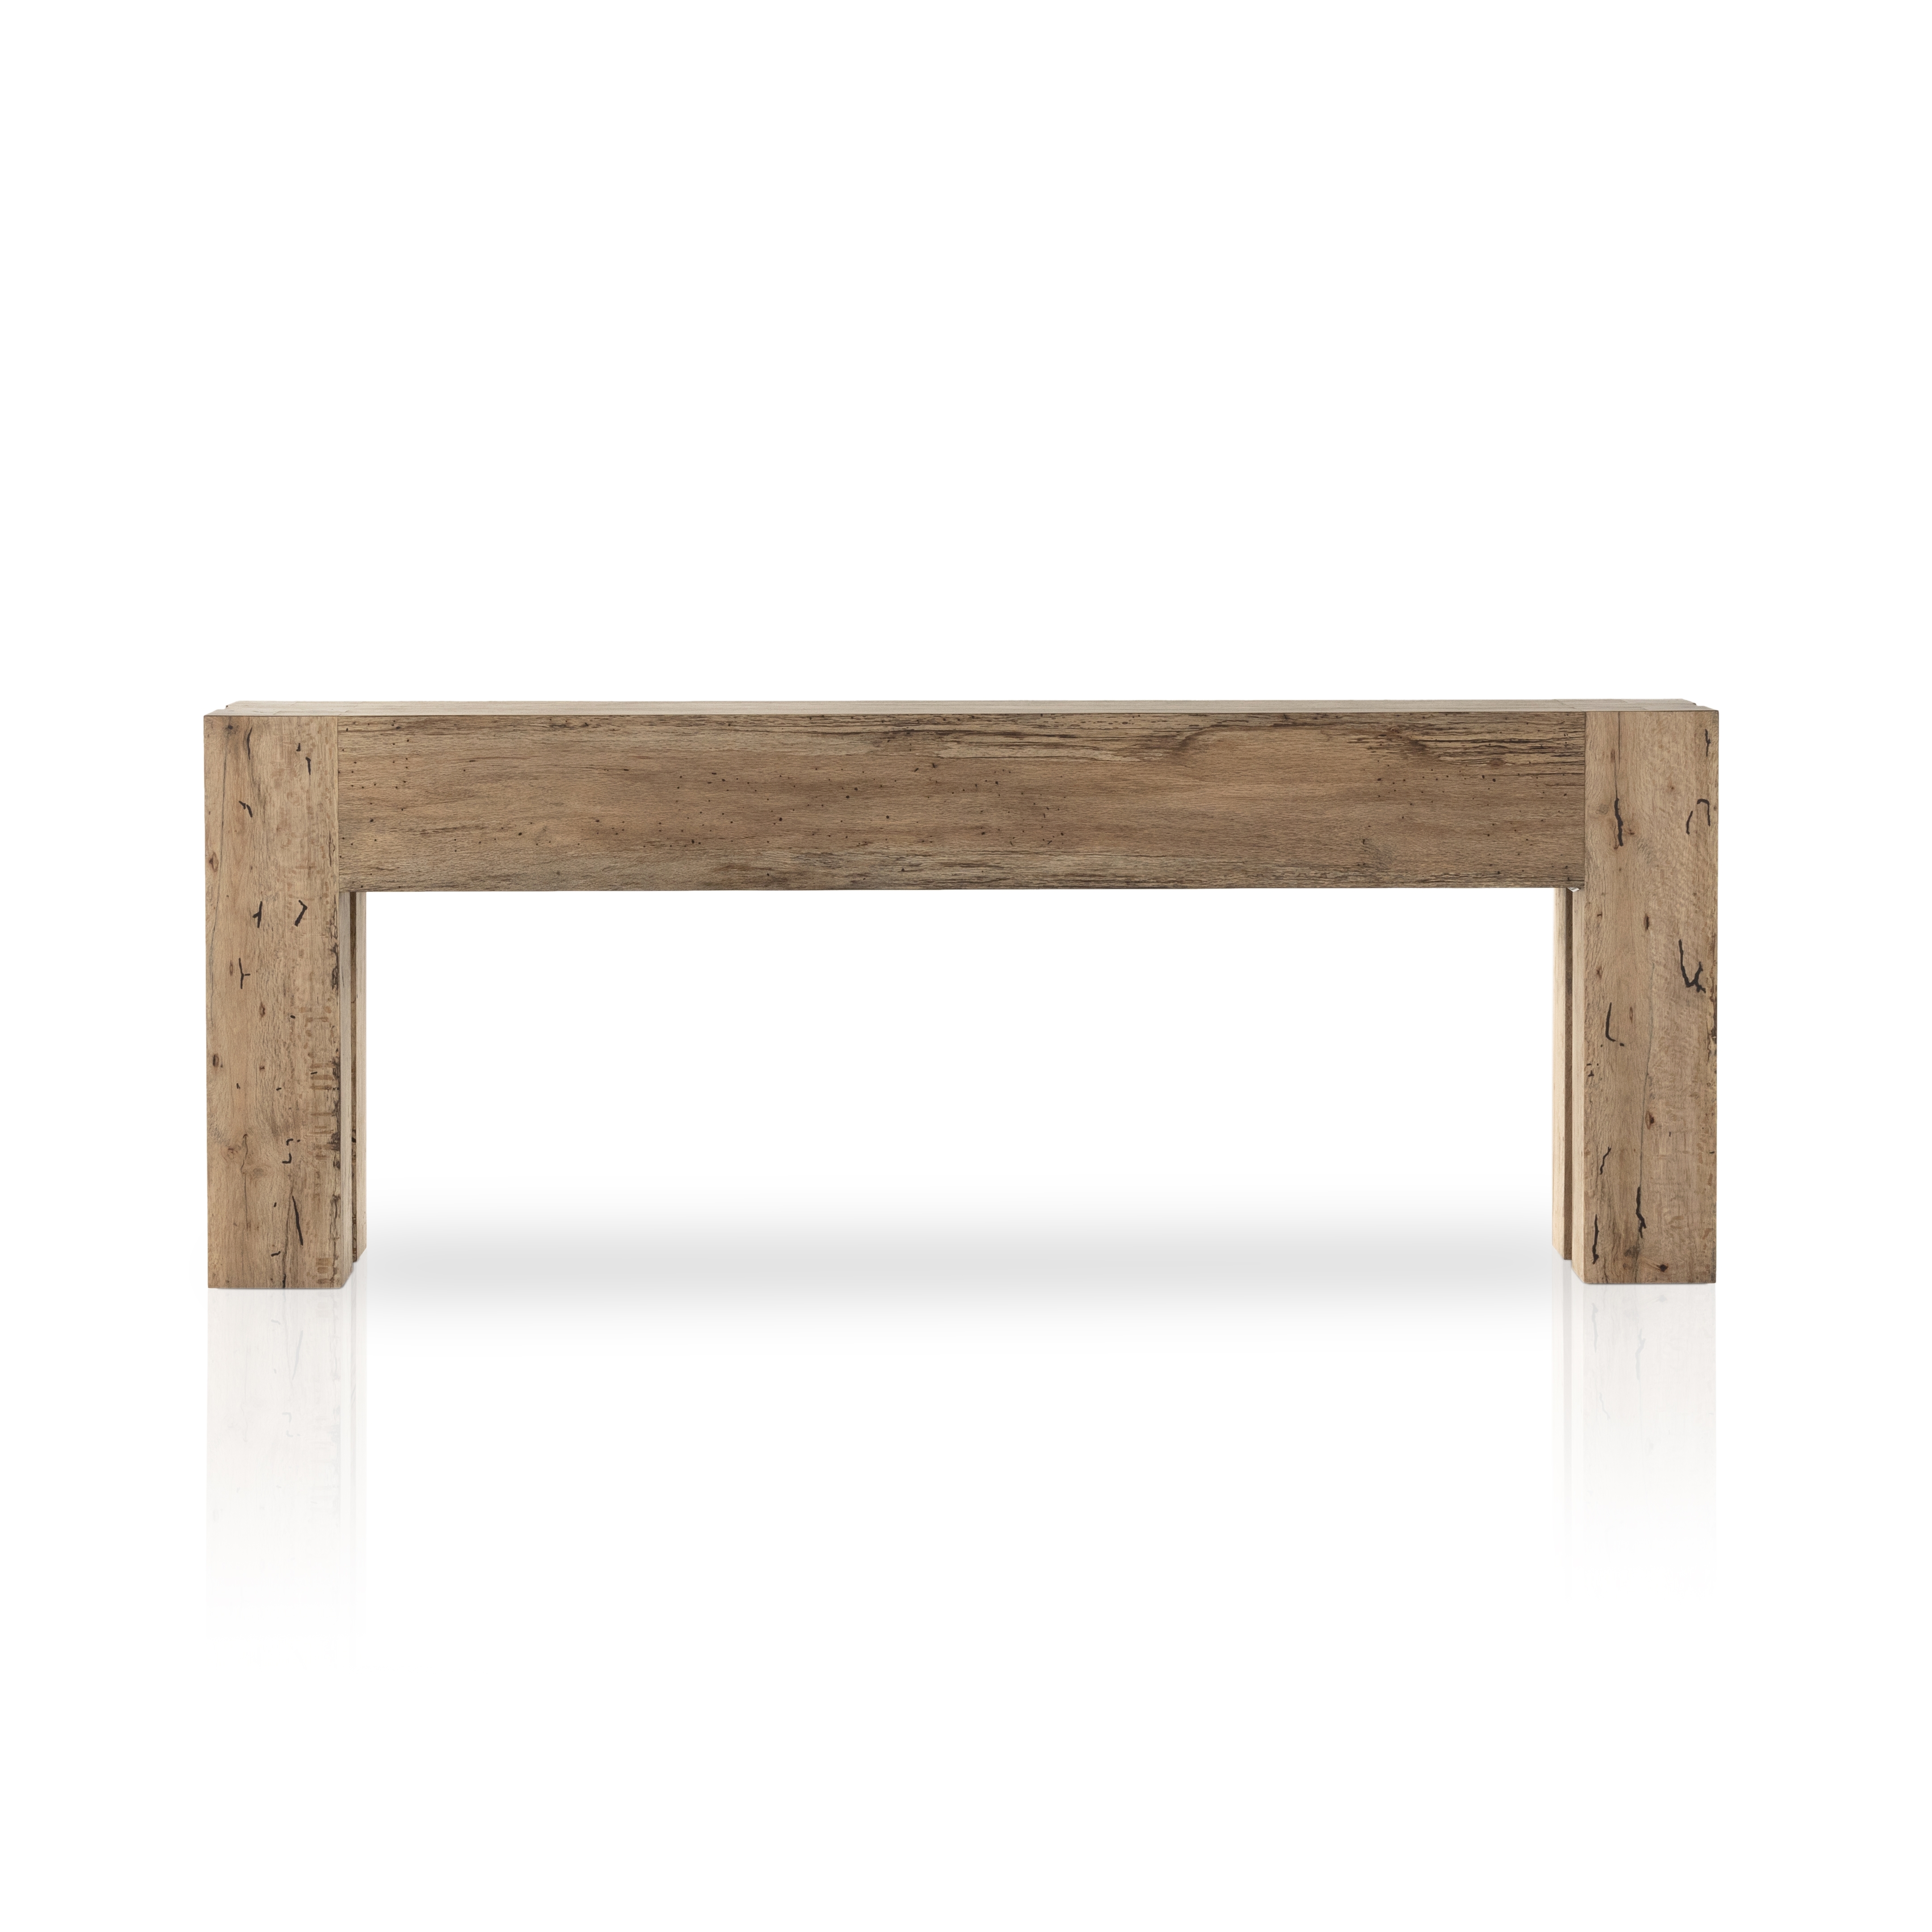 Abaso Console Table-Rustic Wormwood Oak - Image 4